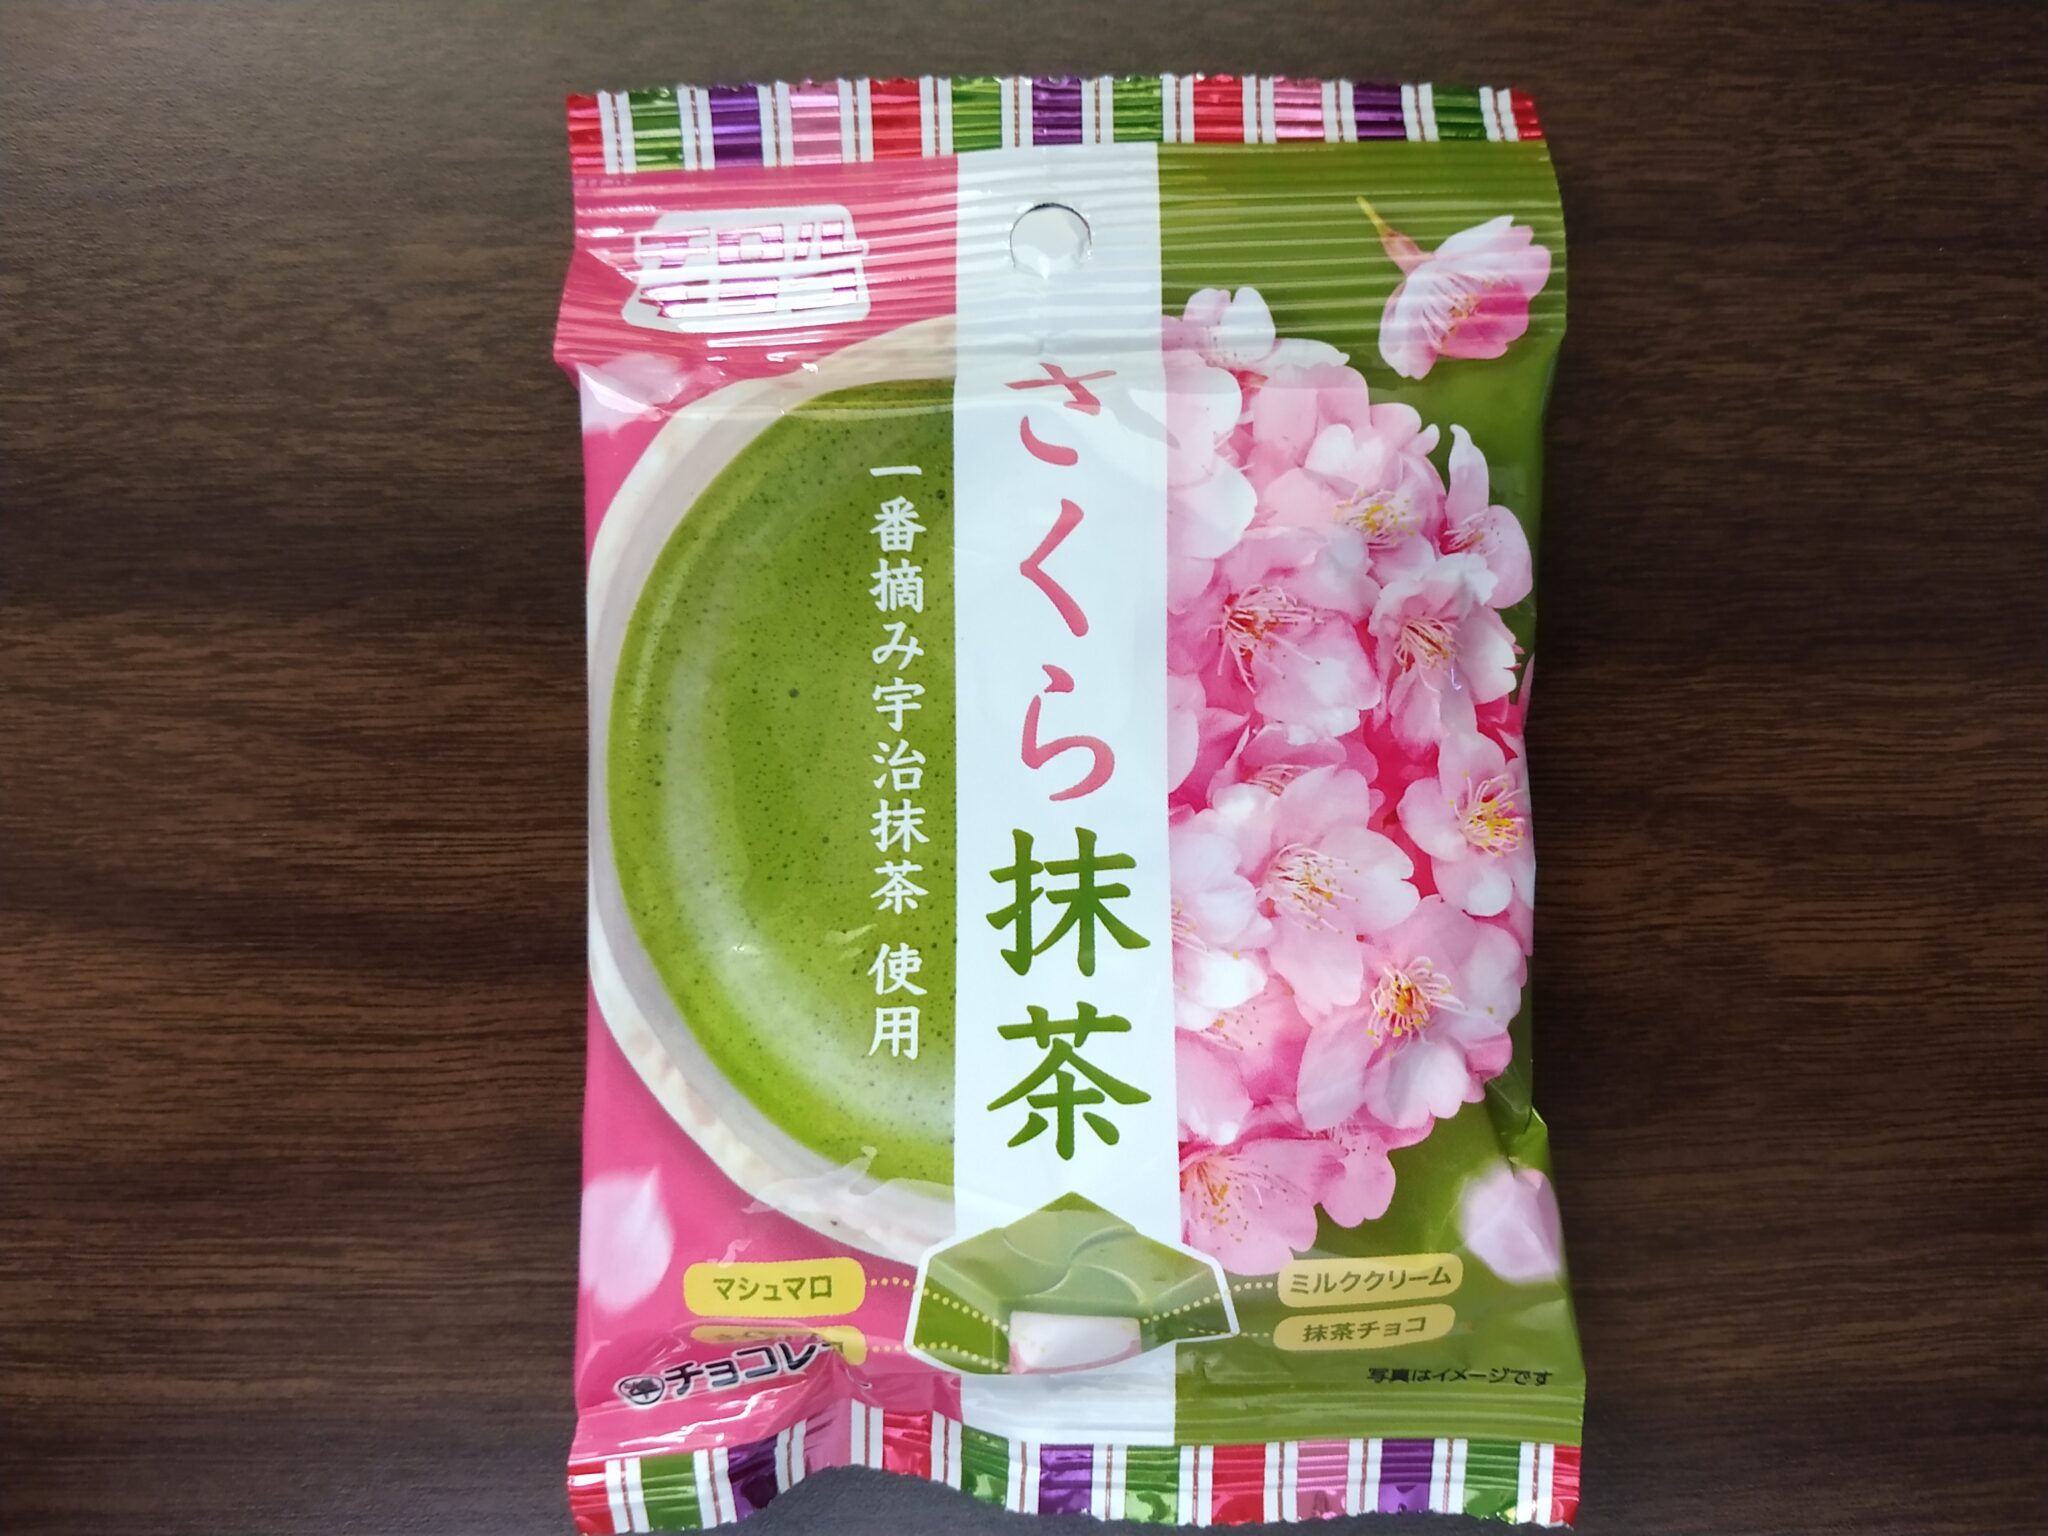 Tirol Chocolate – Sakura Matcha